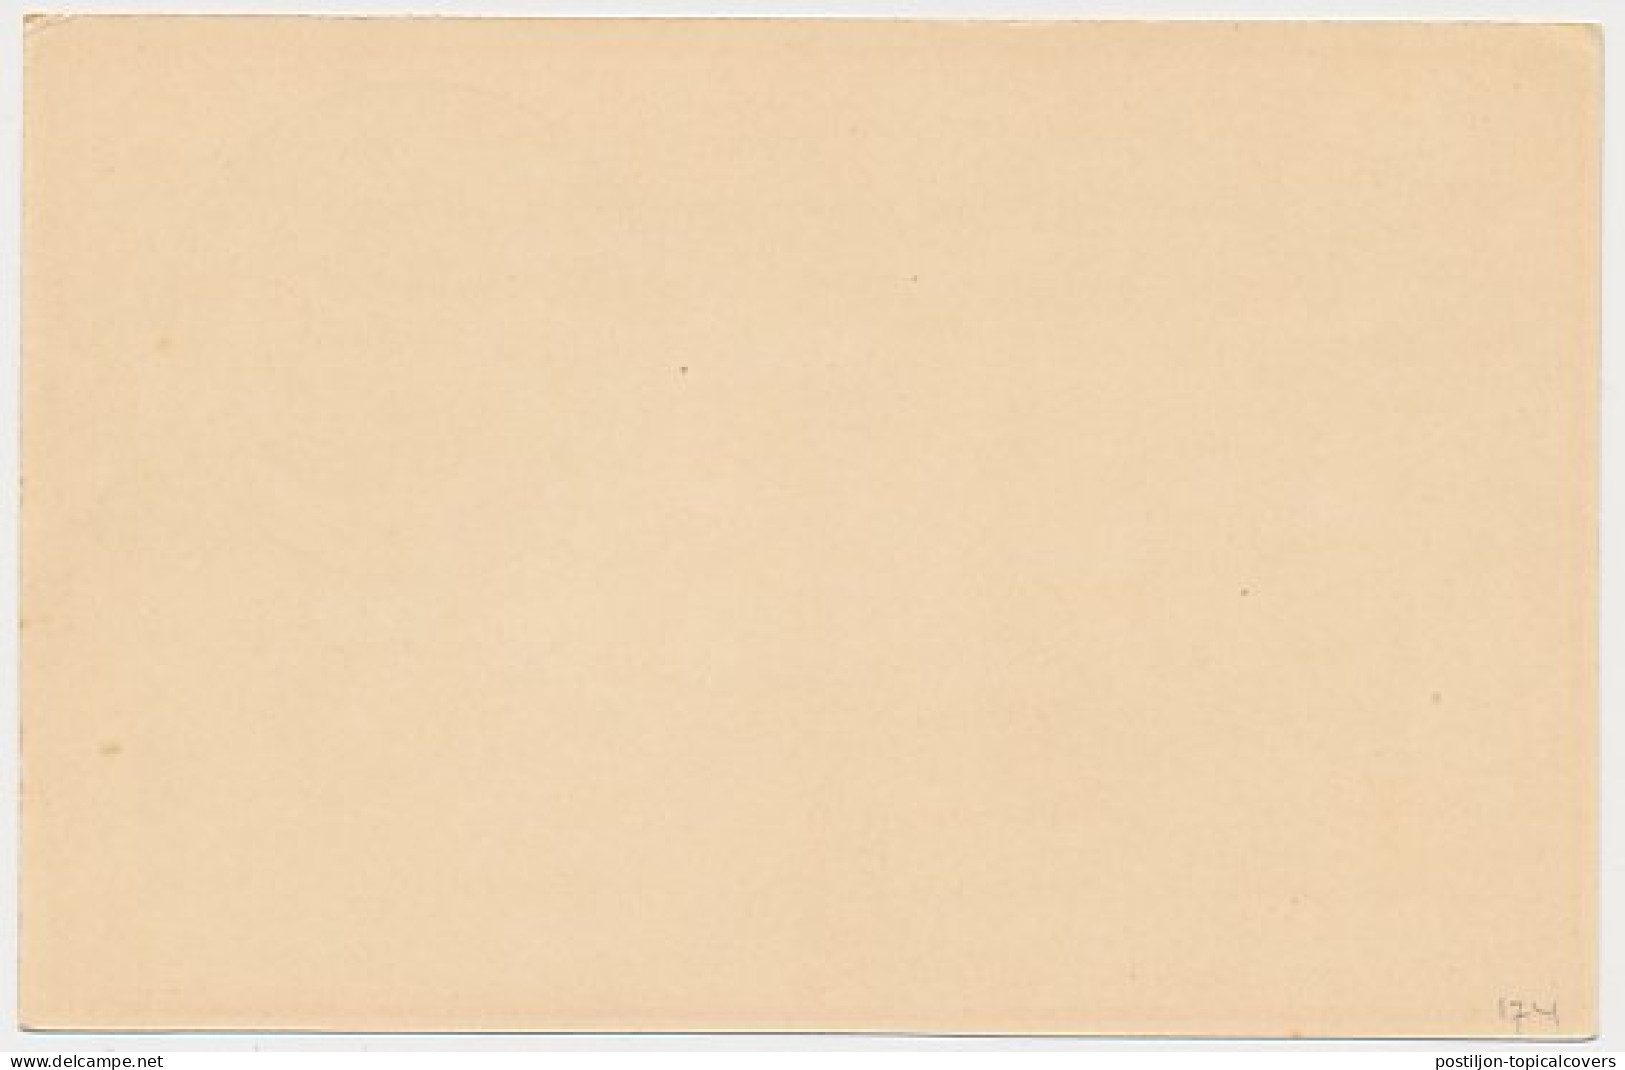 Briefkaart G. 207 S Gravenhage 1925 - Postal Stationery